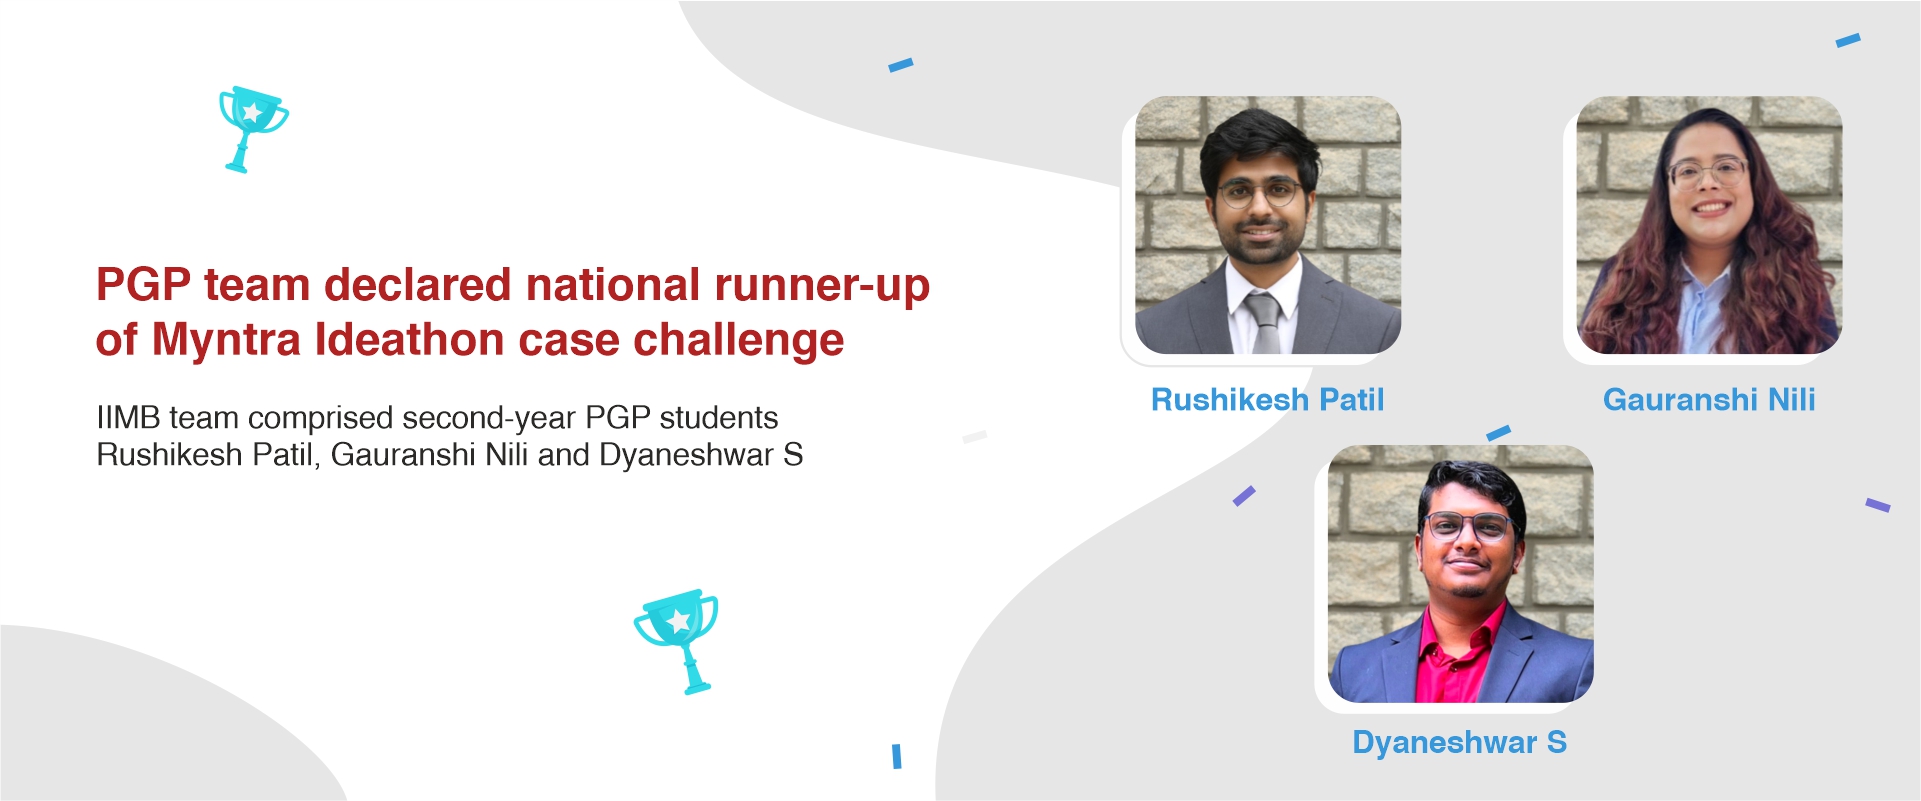 PGP team declared national runner-up of Myntra Ideathon case challenge